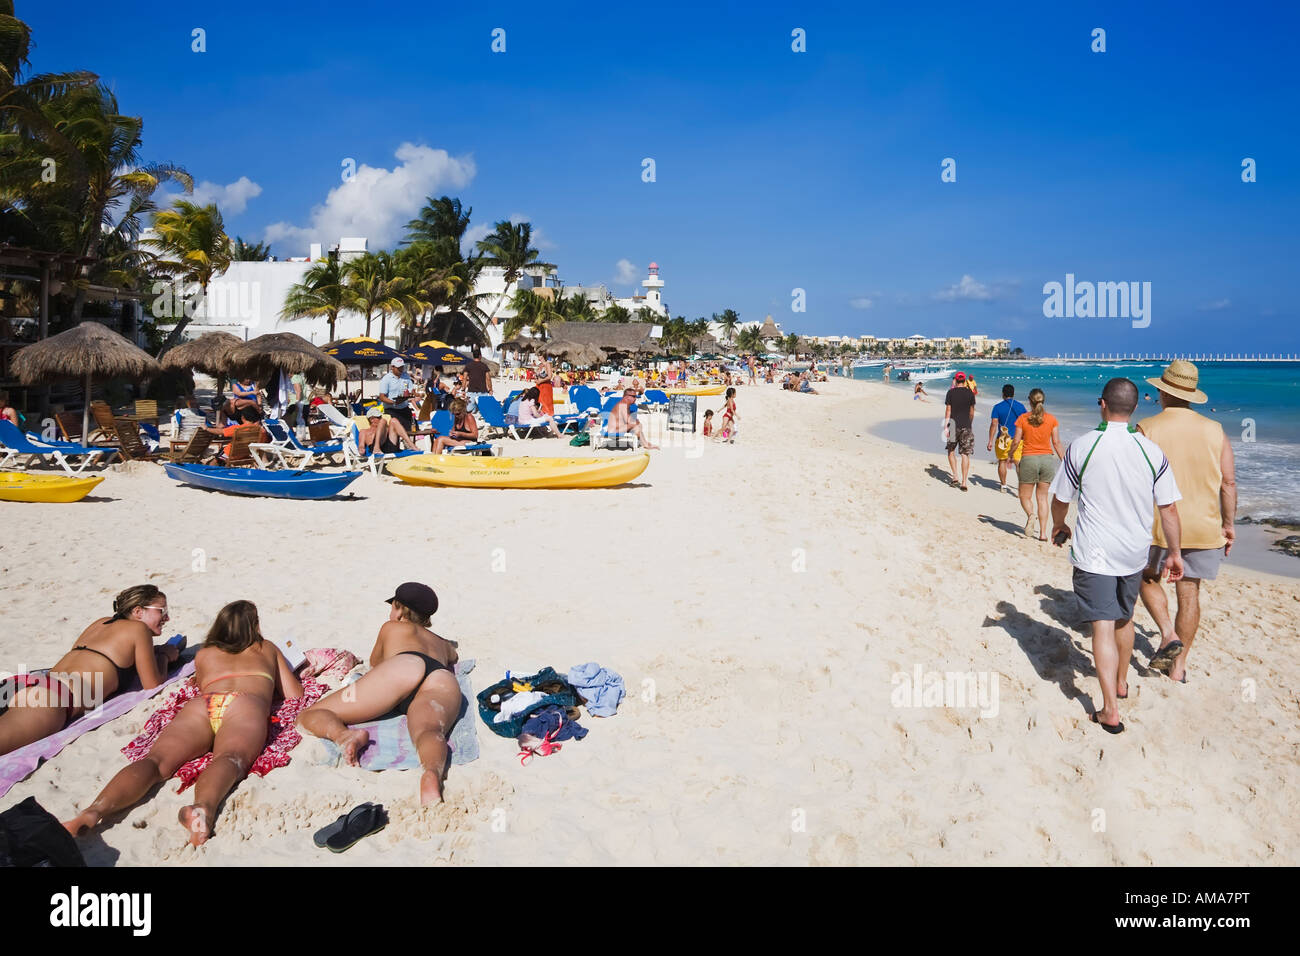 Sunbathers enjoying the turquoise waters and white sand beaches of Playa Del Carmen Stock Photo